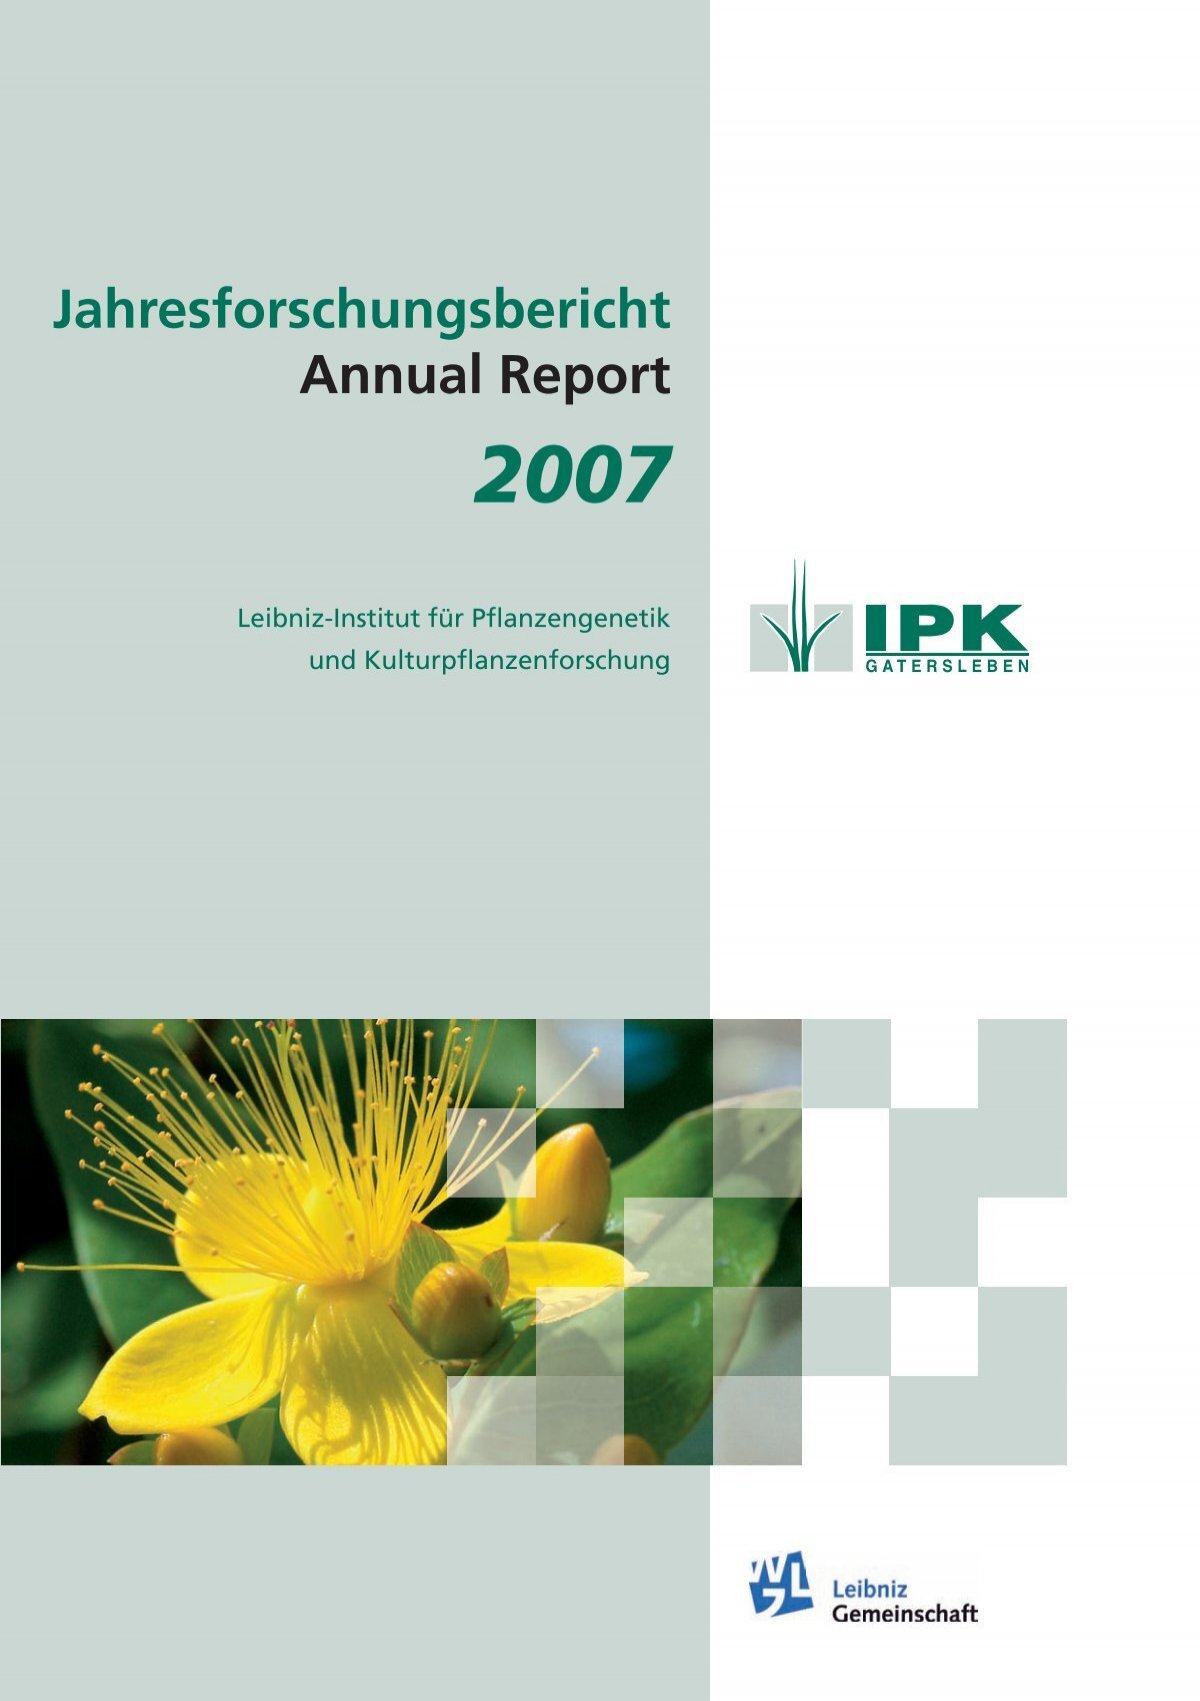 Research Group Ipk Gatersleben